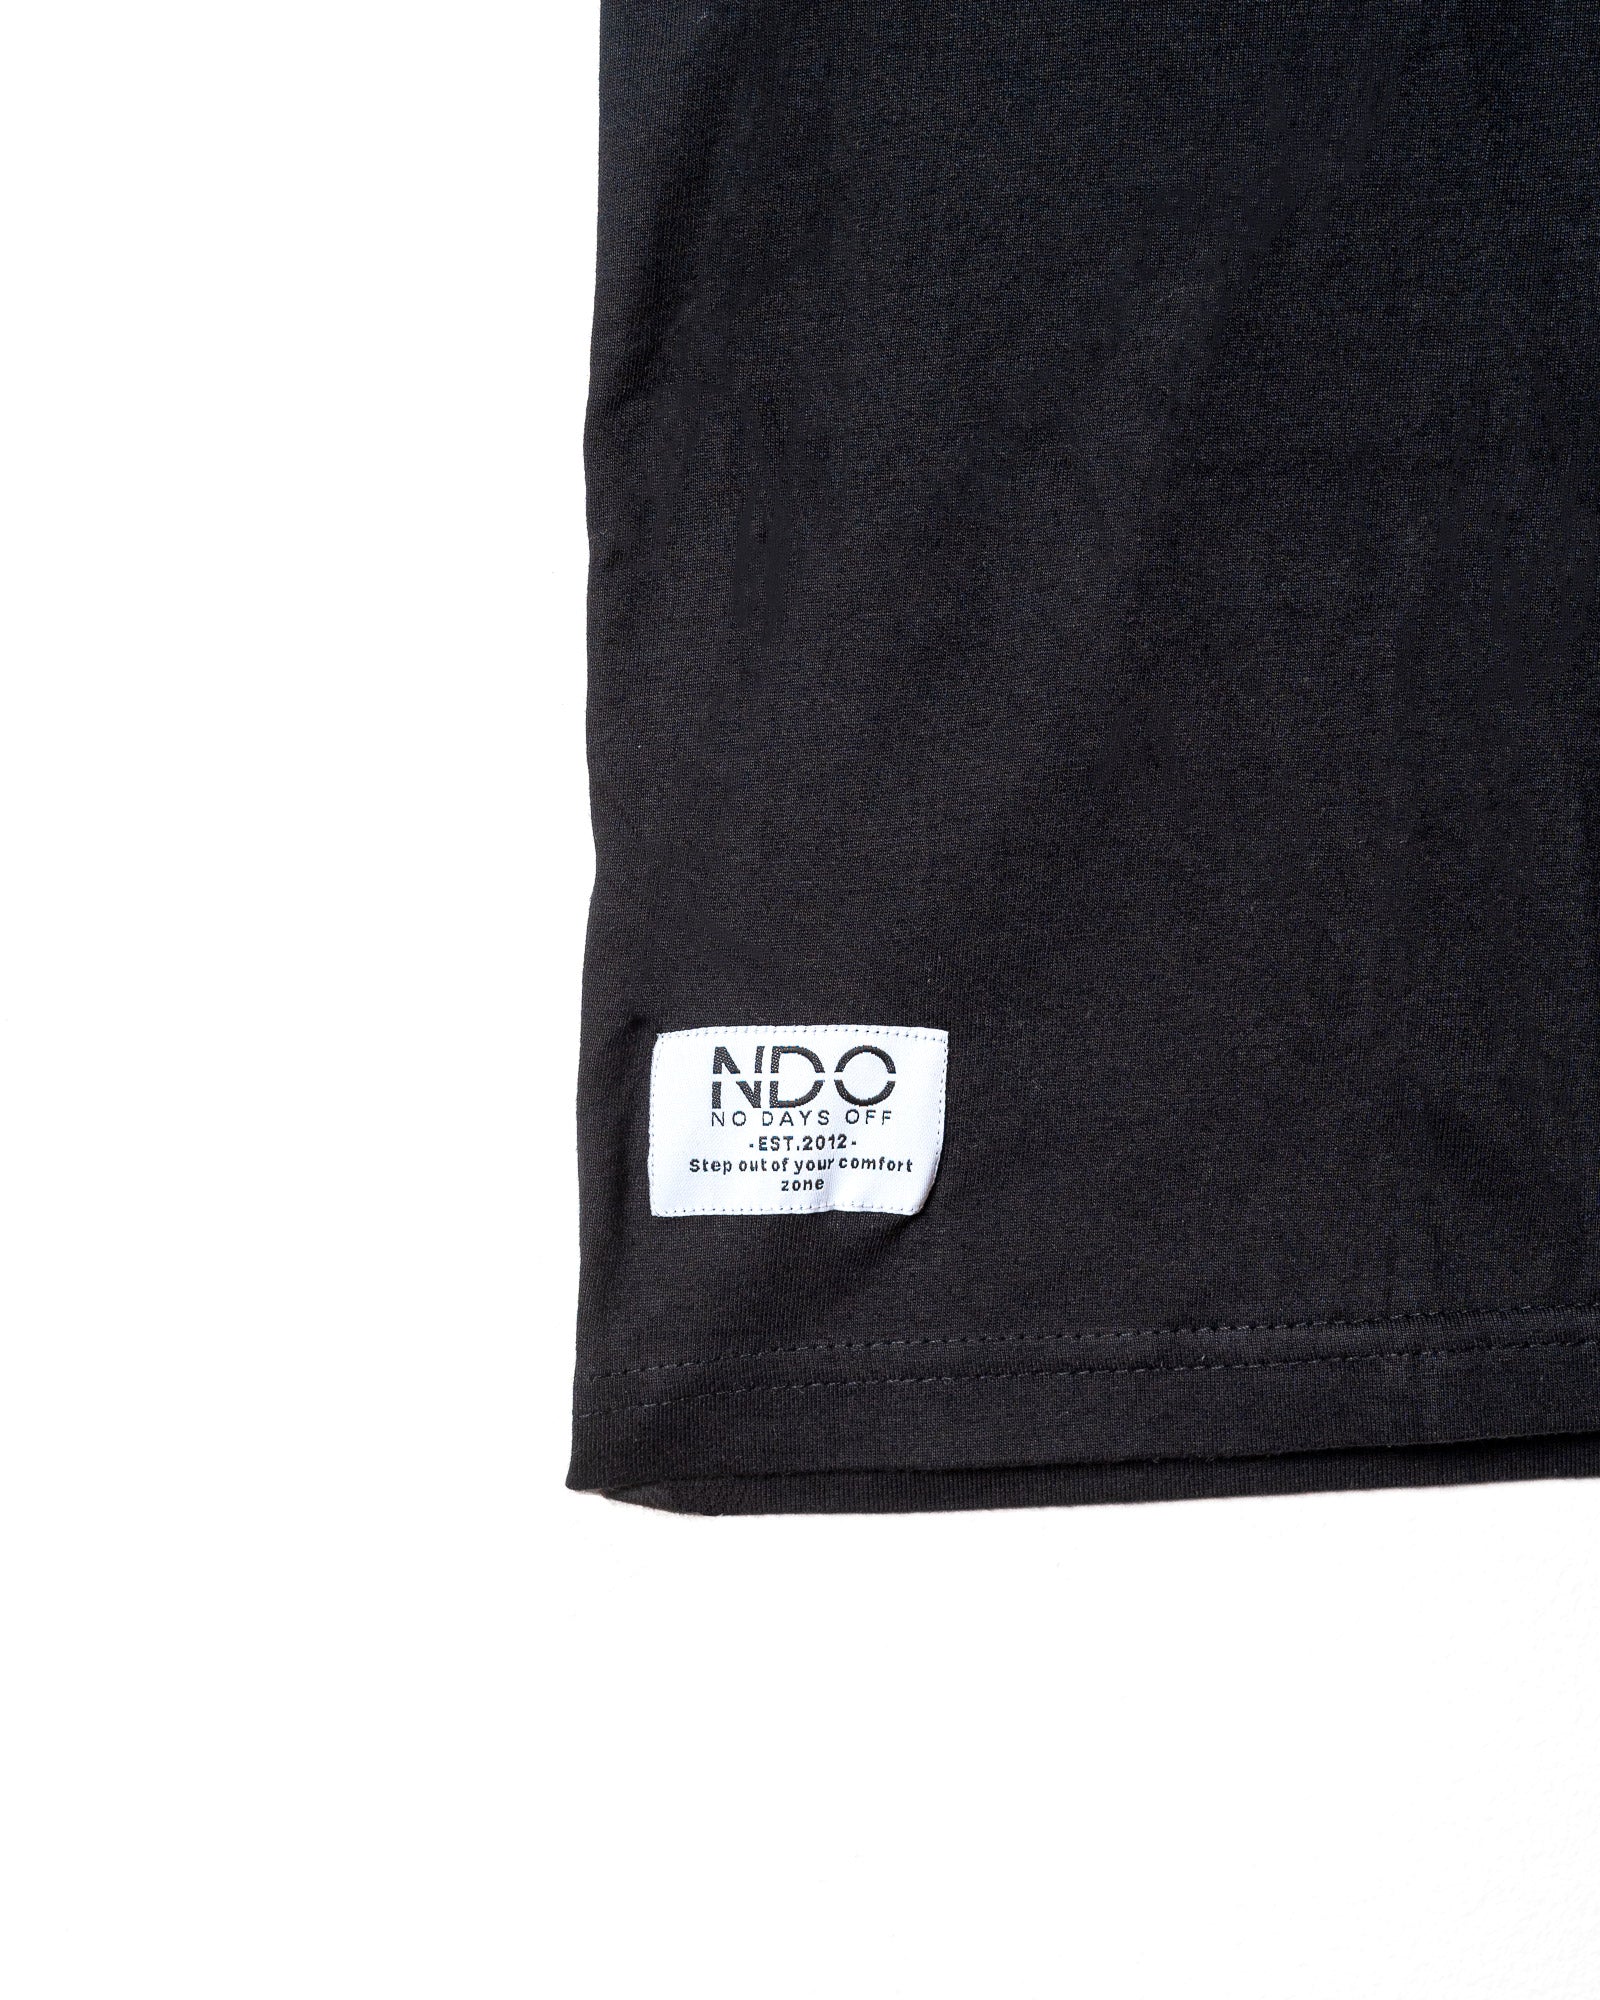 NDO CLASSIC T-SHIRT BLACK (Men)